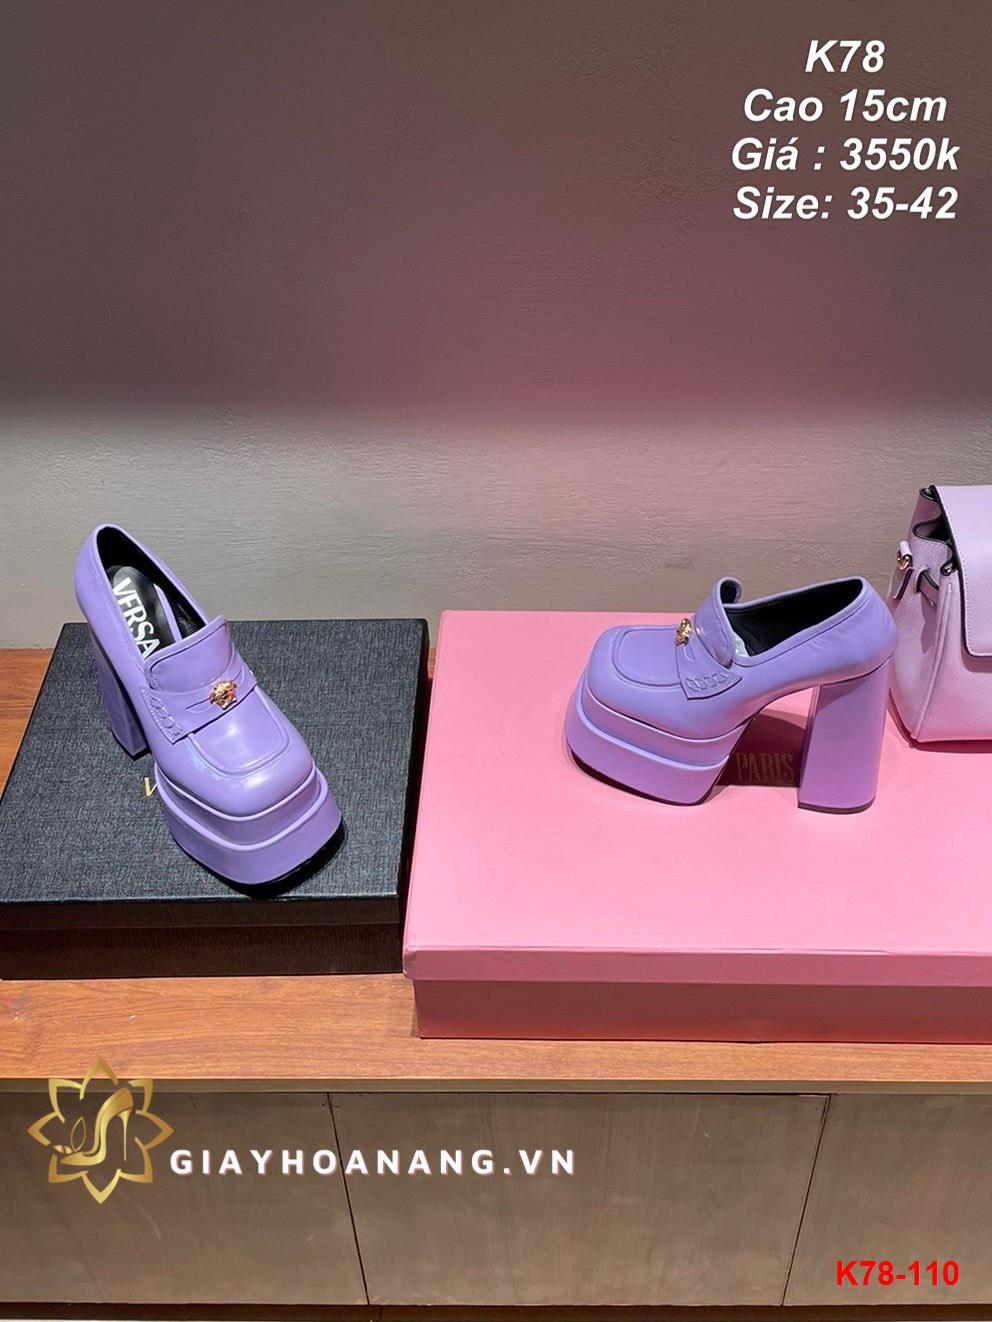 K78-110 Versace giày cao 15cm siêu cấp